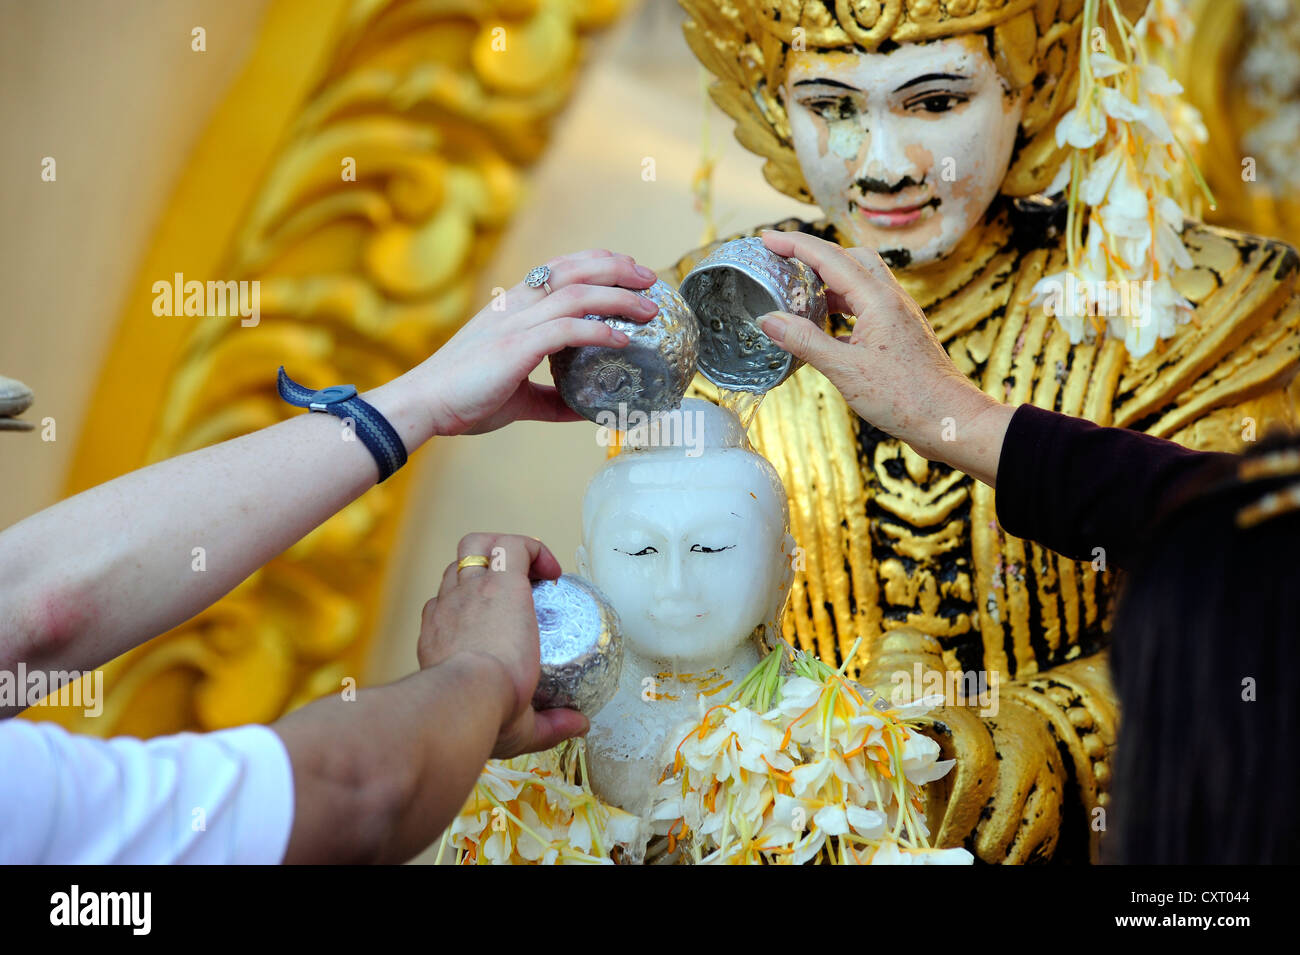 Buddhists during the ritual washing of a Buddha statue, Shwedagon Pagoda, Yangon, Burma also known as Myanmar, Southeast Asia Stock Photo